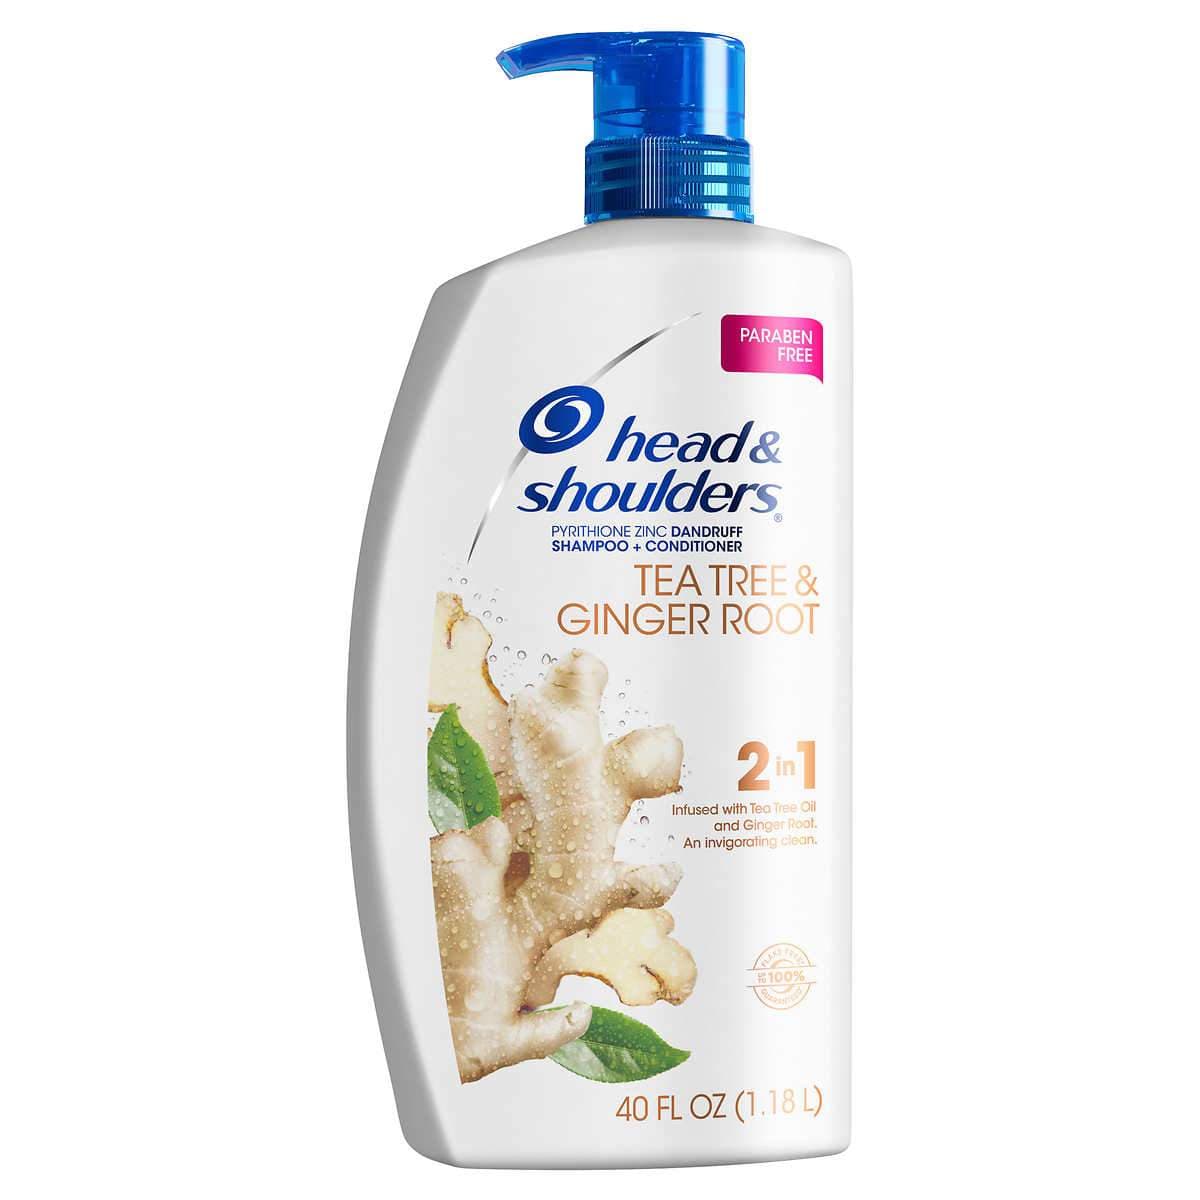 Head & Shoulders Tea Tree & Ginger Root 2-in-1 Shampoo & Conditioner Minoustore